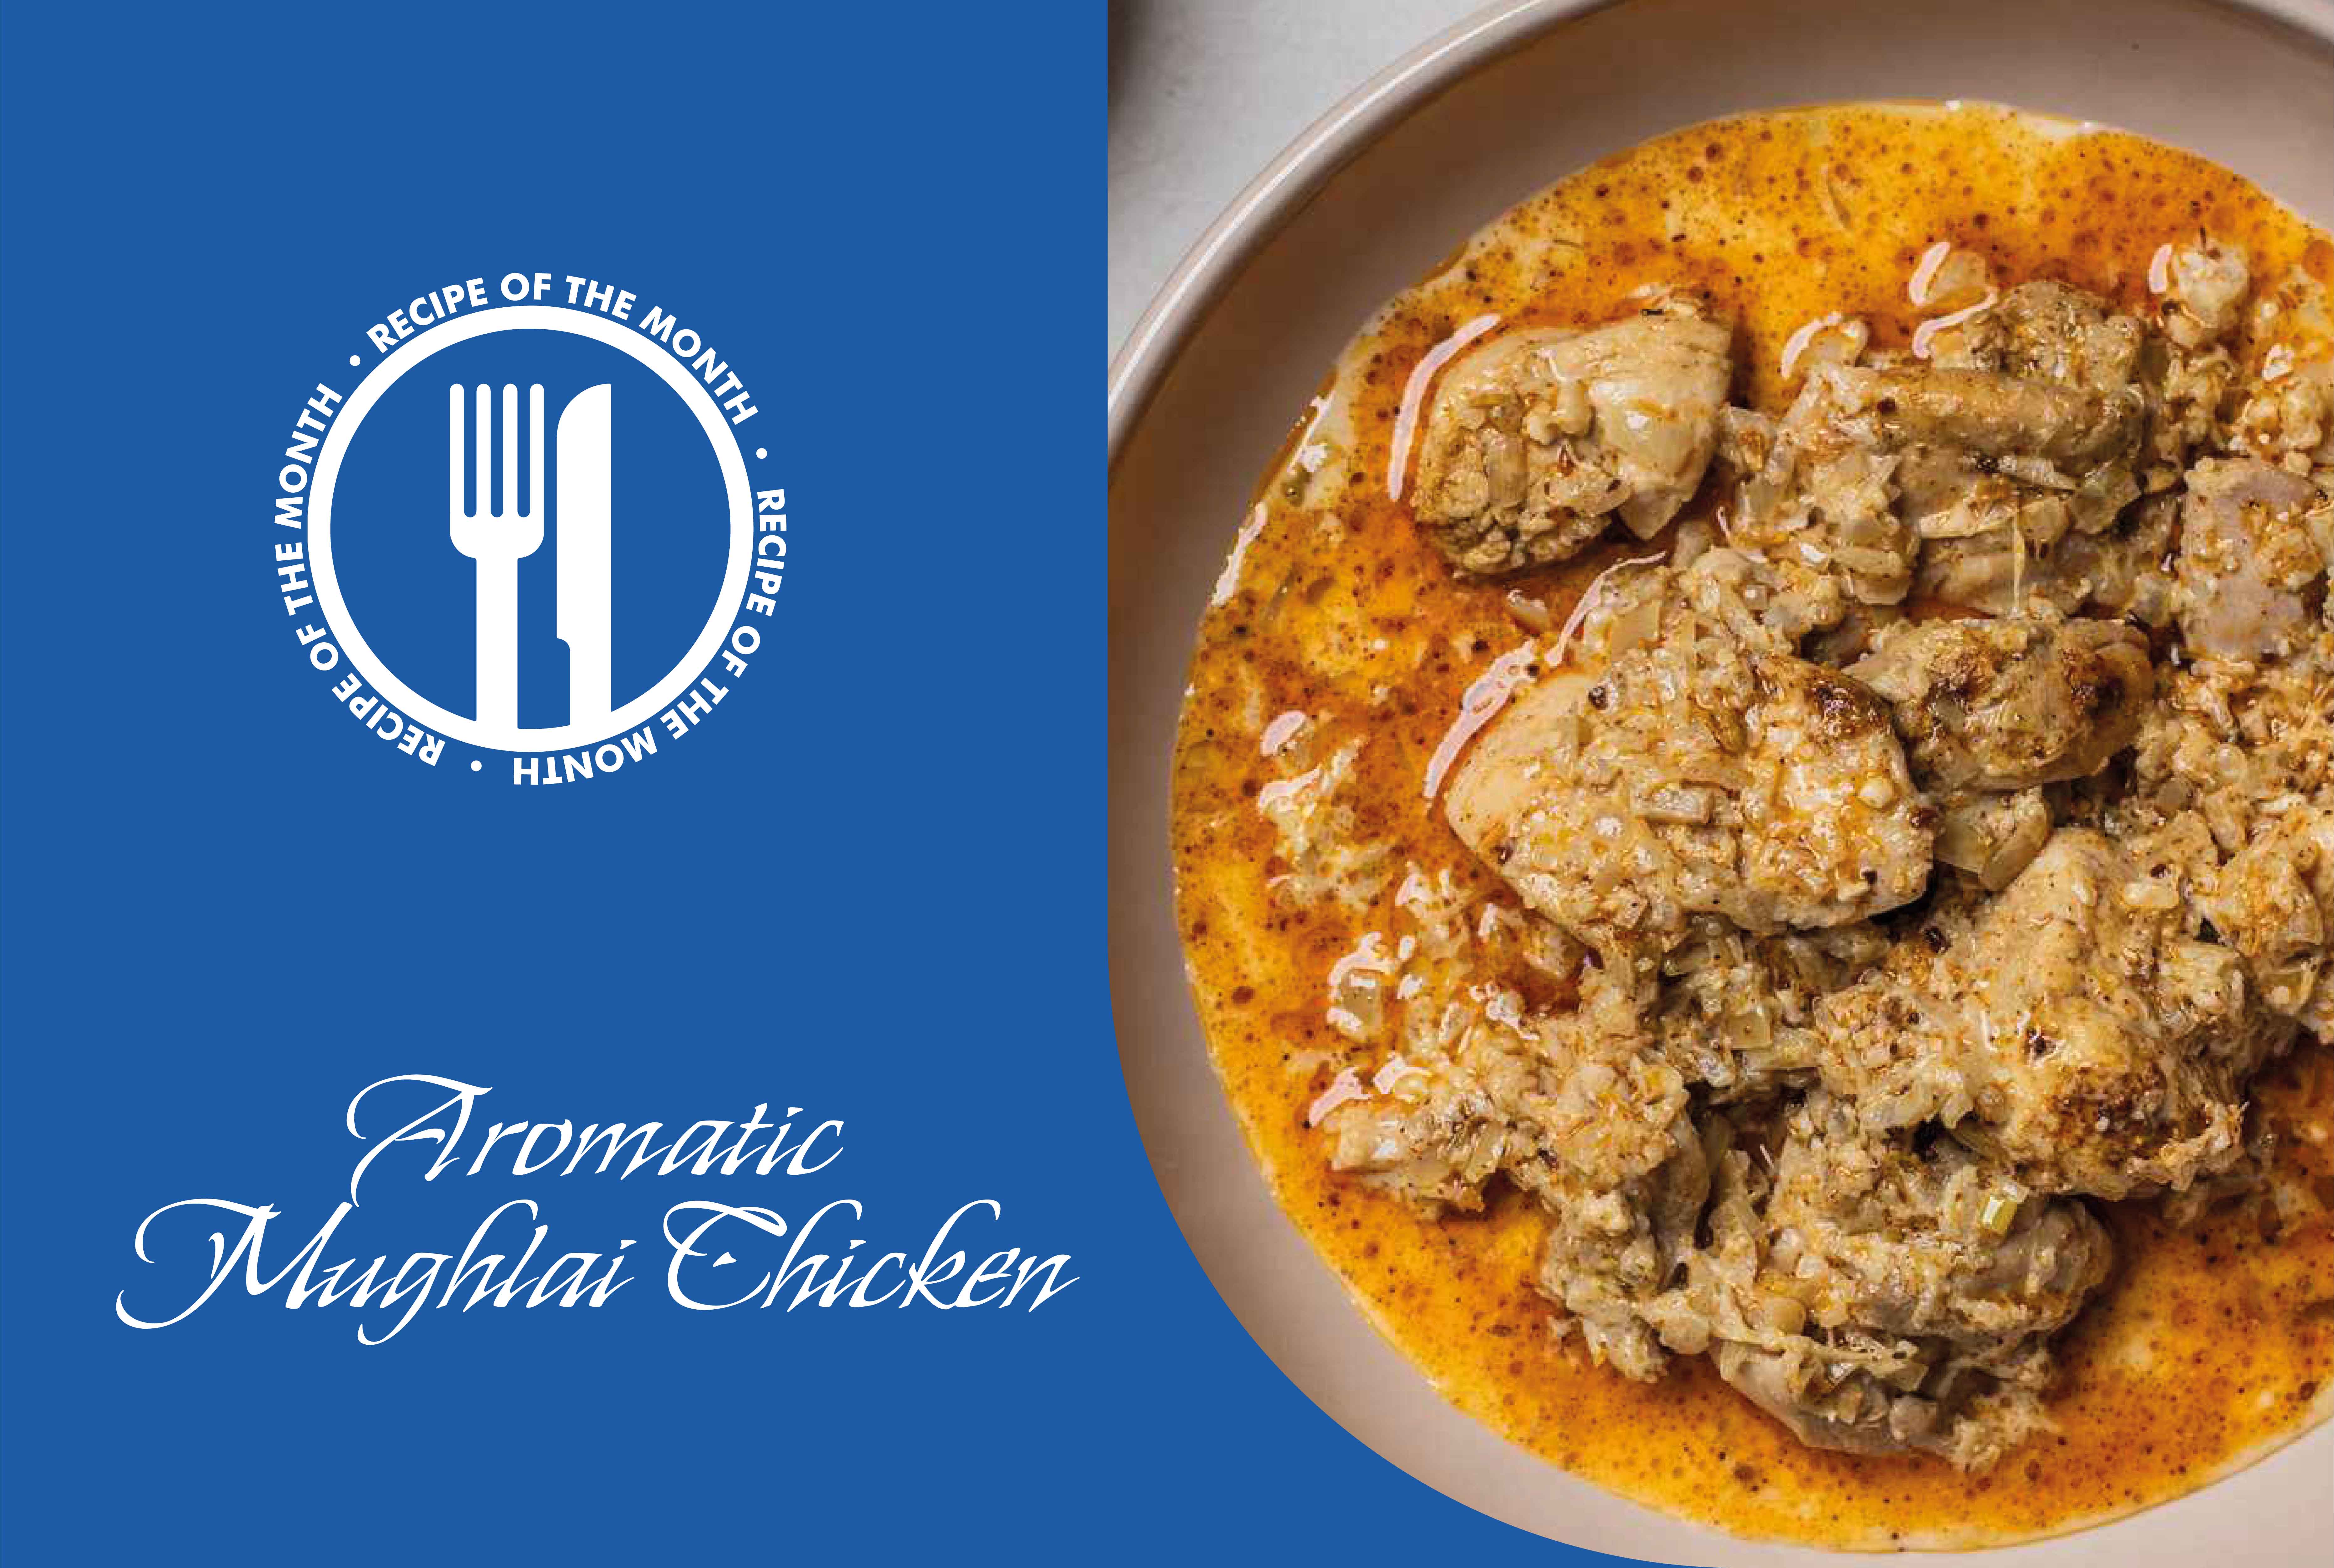 Recipe of the month-Mughlai Chicken